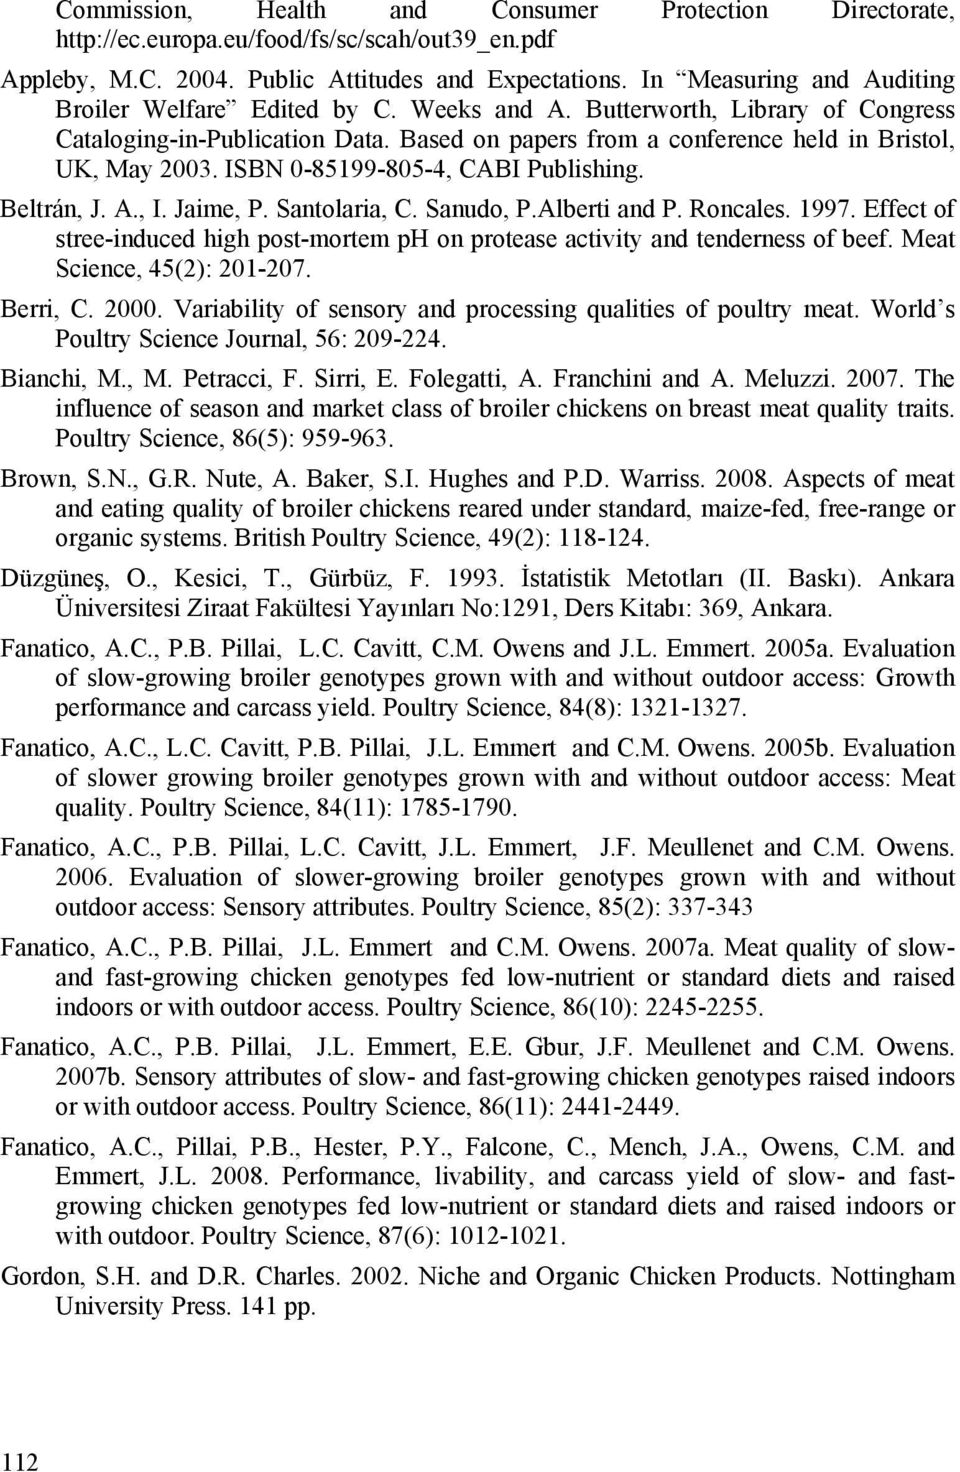 ISBN 0-85199-805-4, CABI Publishing. Beltrán, J. A., I. Jaime, P. Santolaria, C. Sanudo, P.Alberti and P. Roncales. 1997.